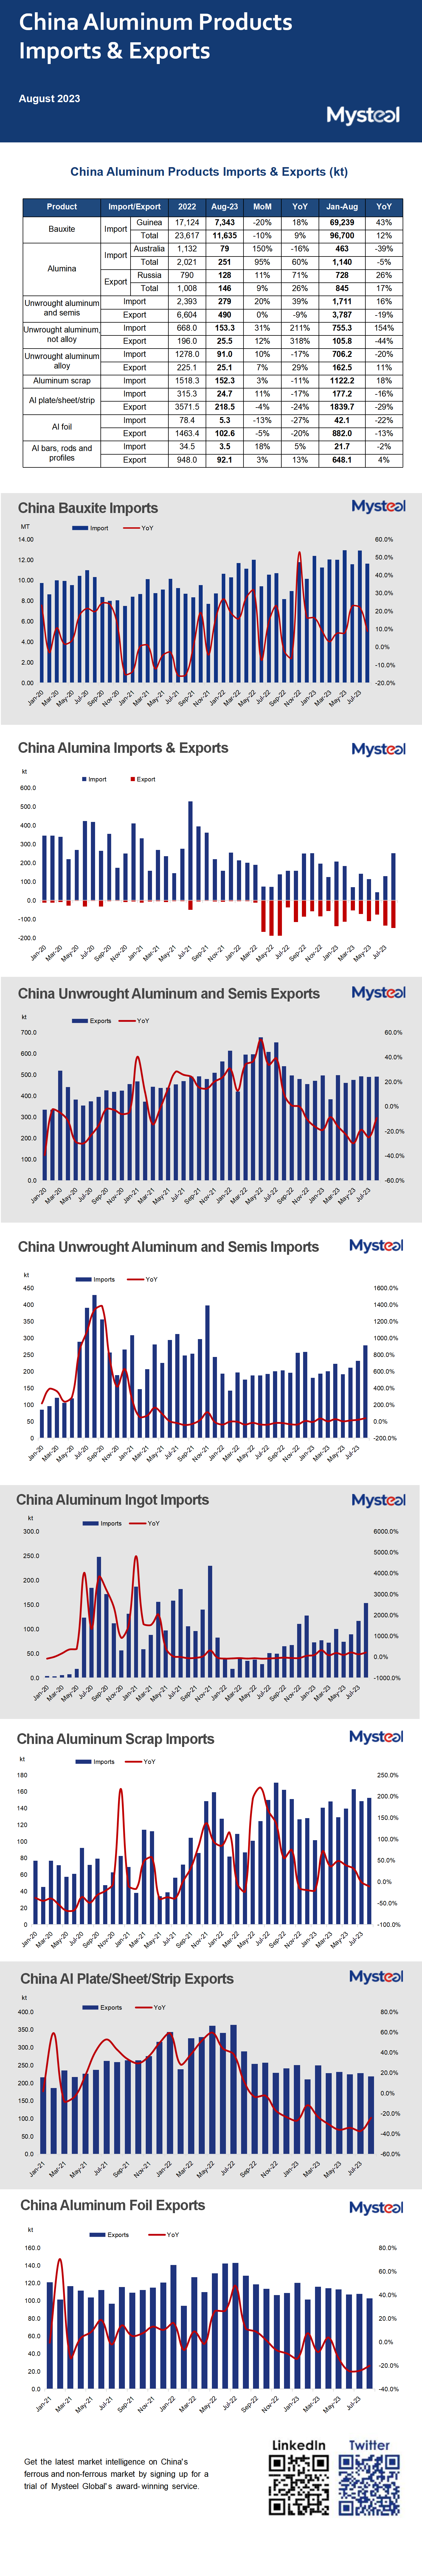 China aluminum imports and exports